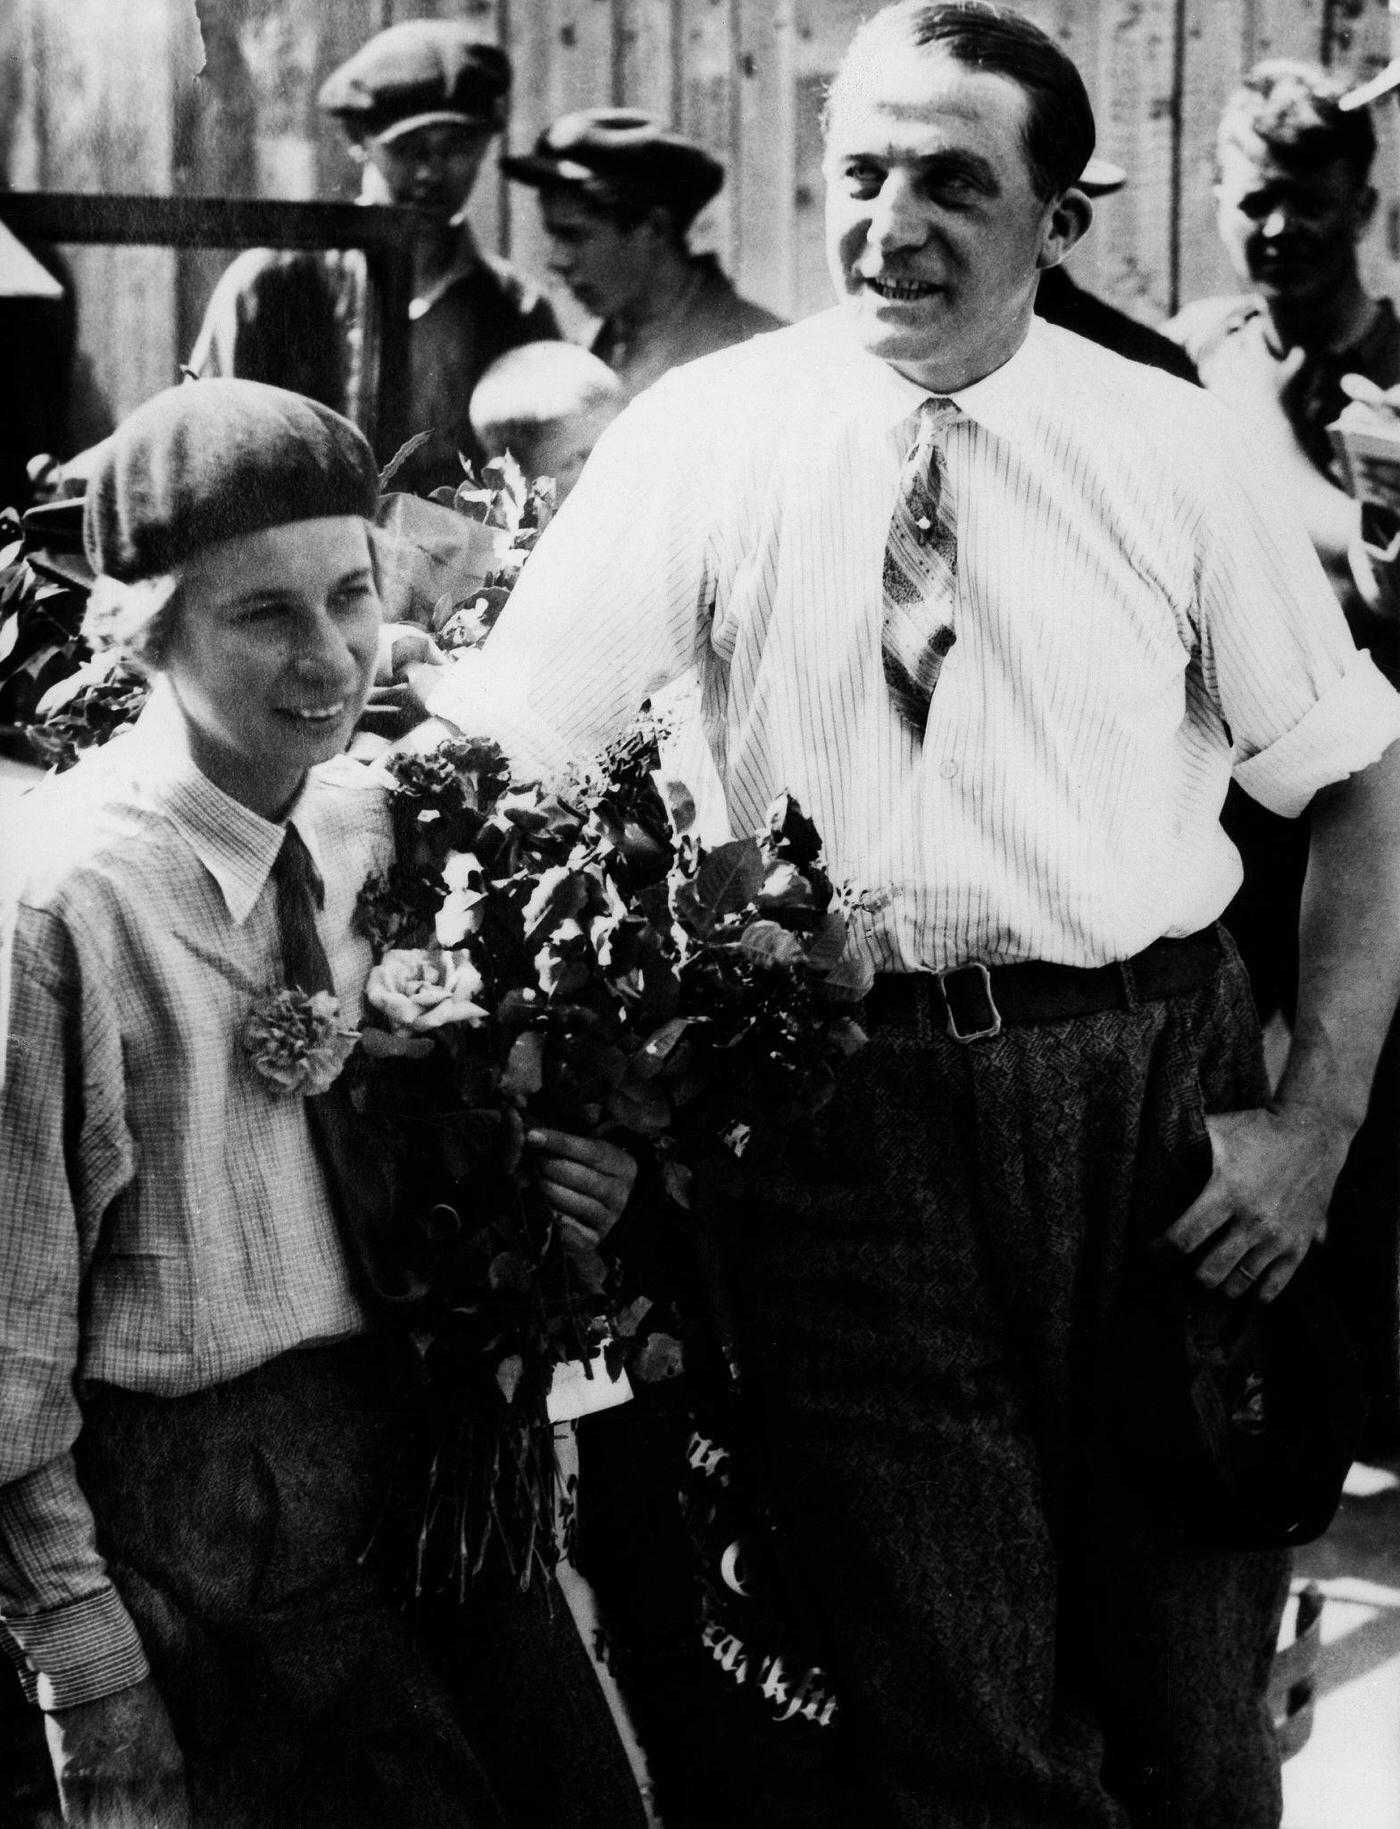 Clärenore Stinnes and Axel Söderström Arriving in Berlin, 1929